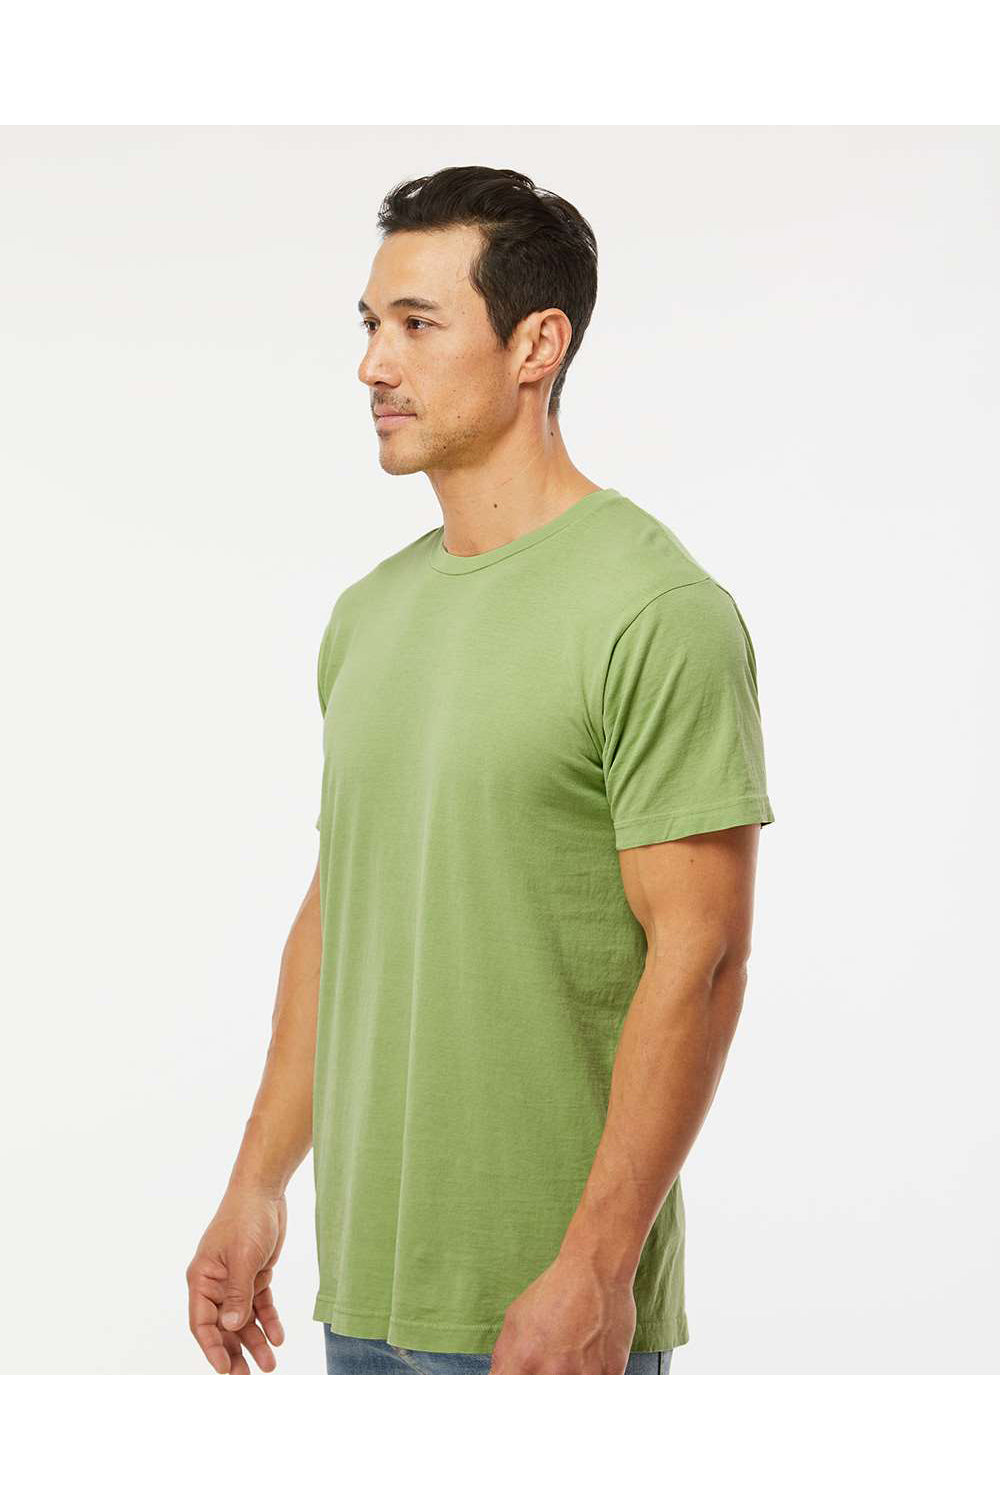 M&O 6500M Mens Vintage Garment Dyed Short Sleeve Crewneck T-Shirt Aloe Green Model Side